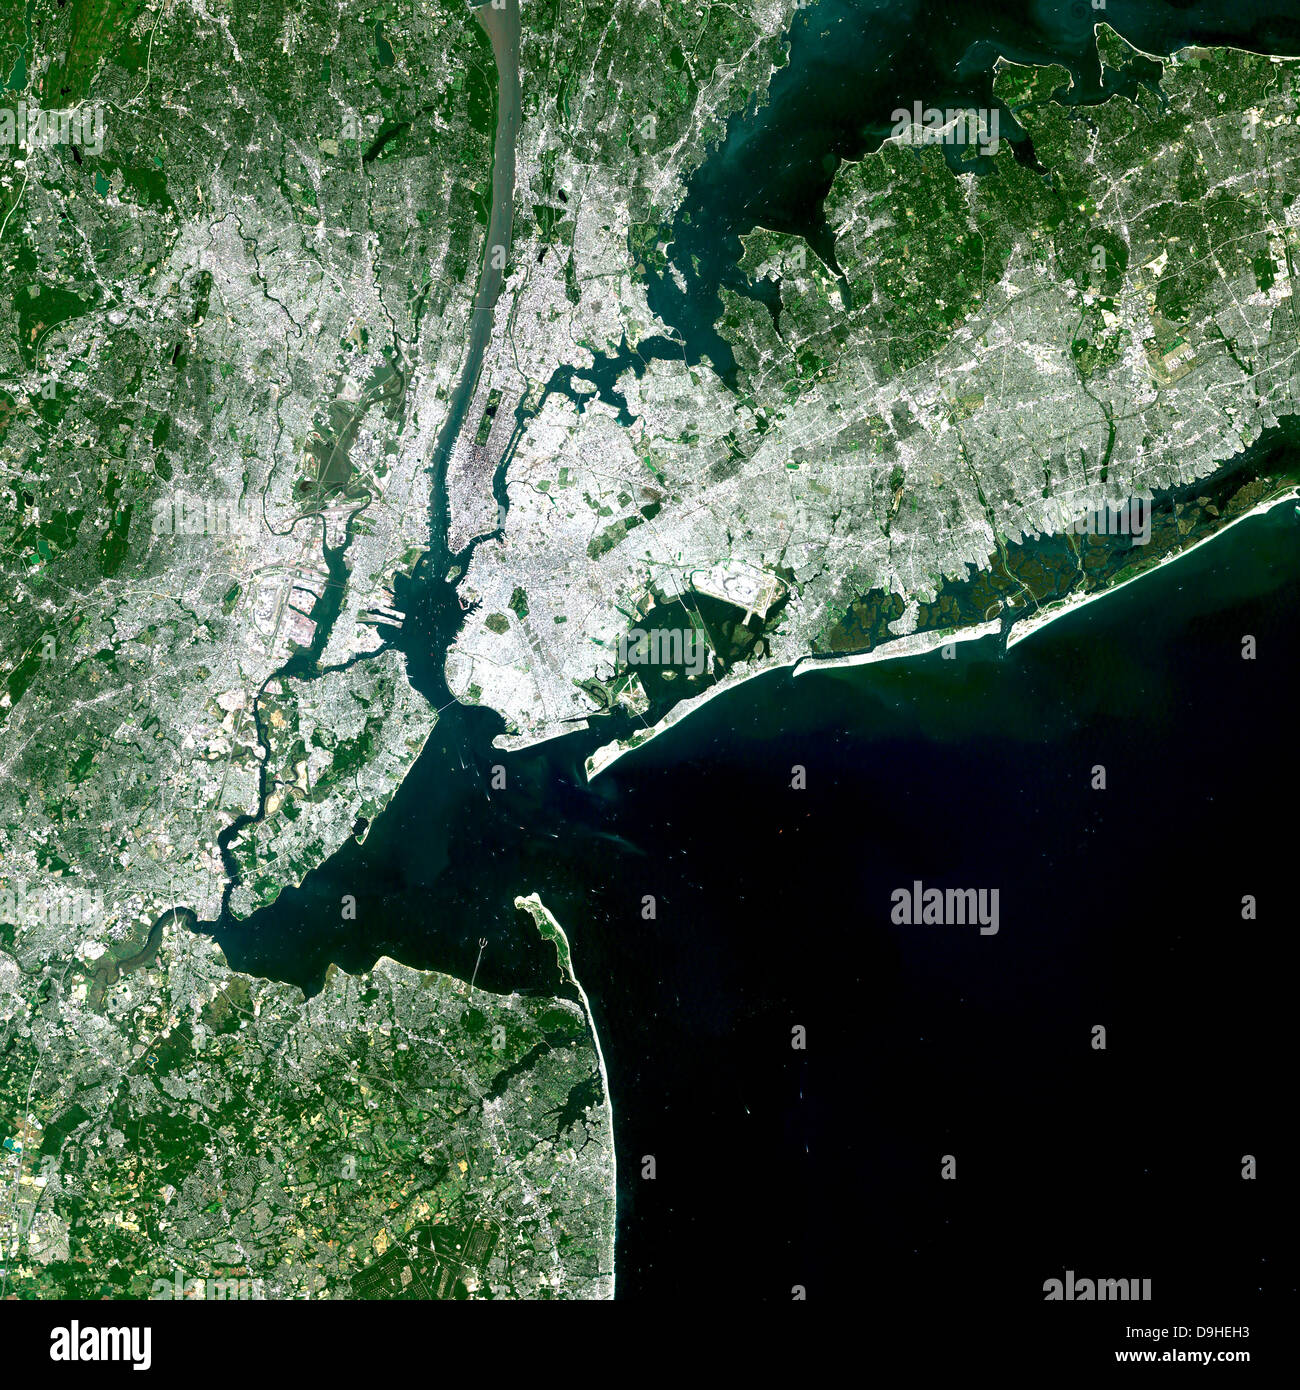 August 8, 2002 - Satellite view of New York City, New York. Stock Photo